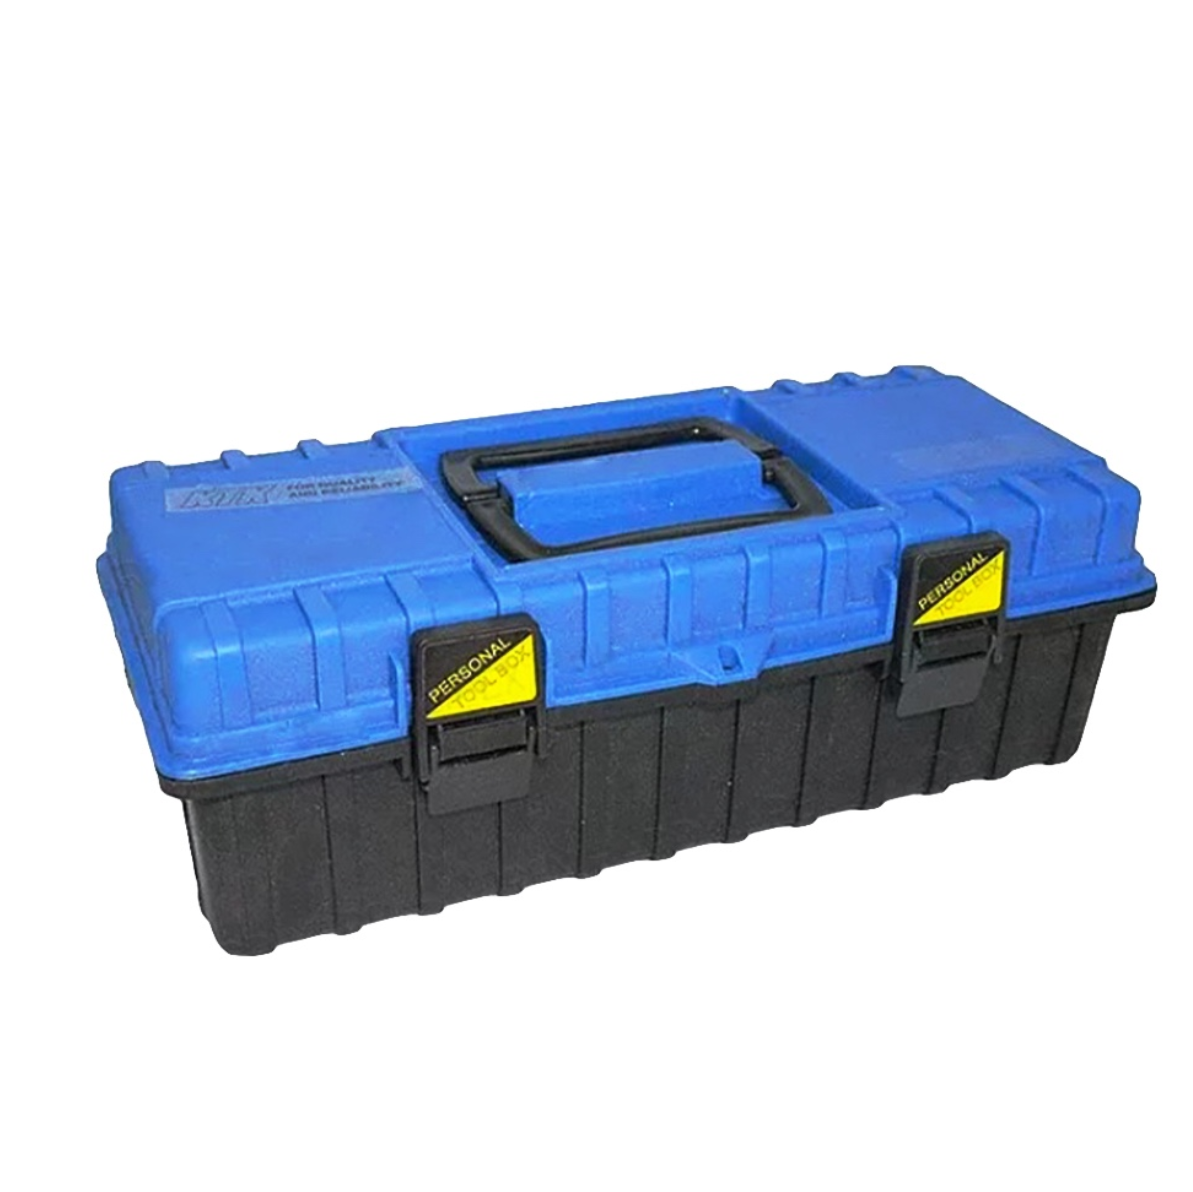 KTK 370 Tool Box With Organizer BLUE